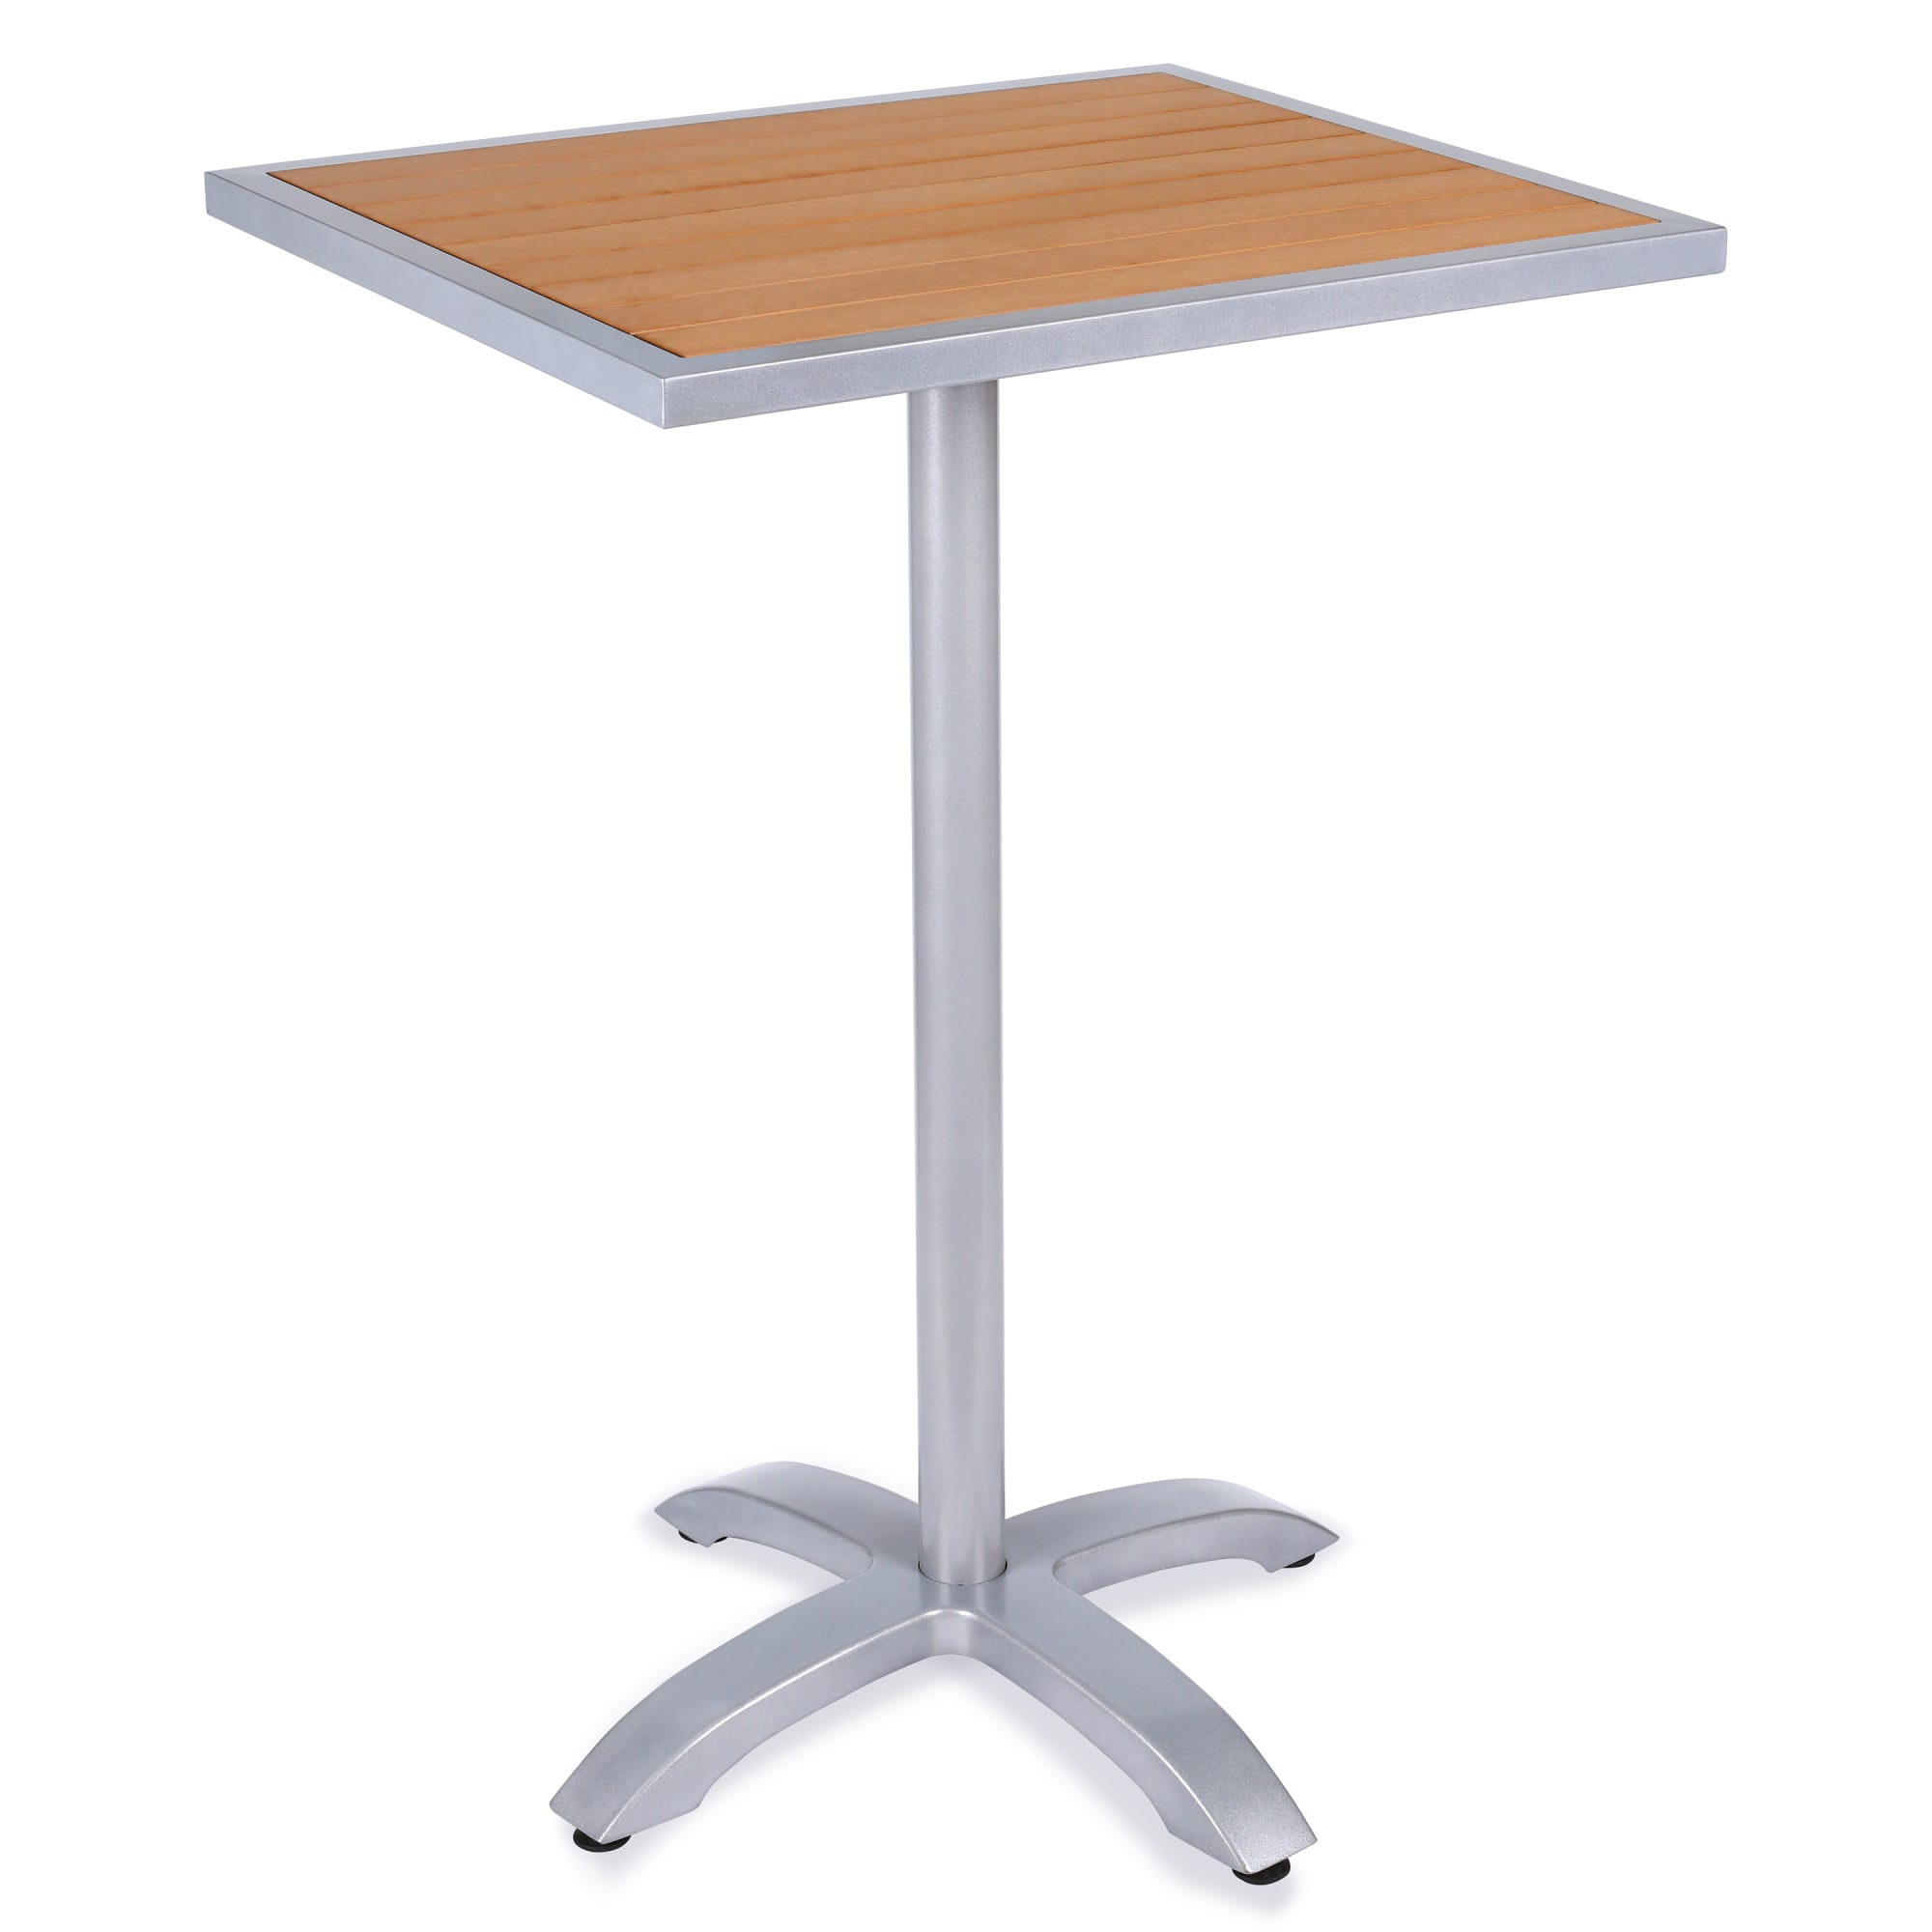 Aluminum Patio Tables with Faux Teak Top - Bar Height with Aluminum Patio Tables with Faux Teak Top - Bar Height